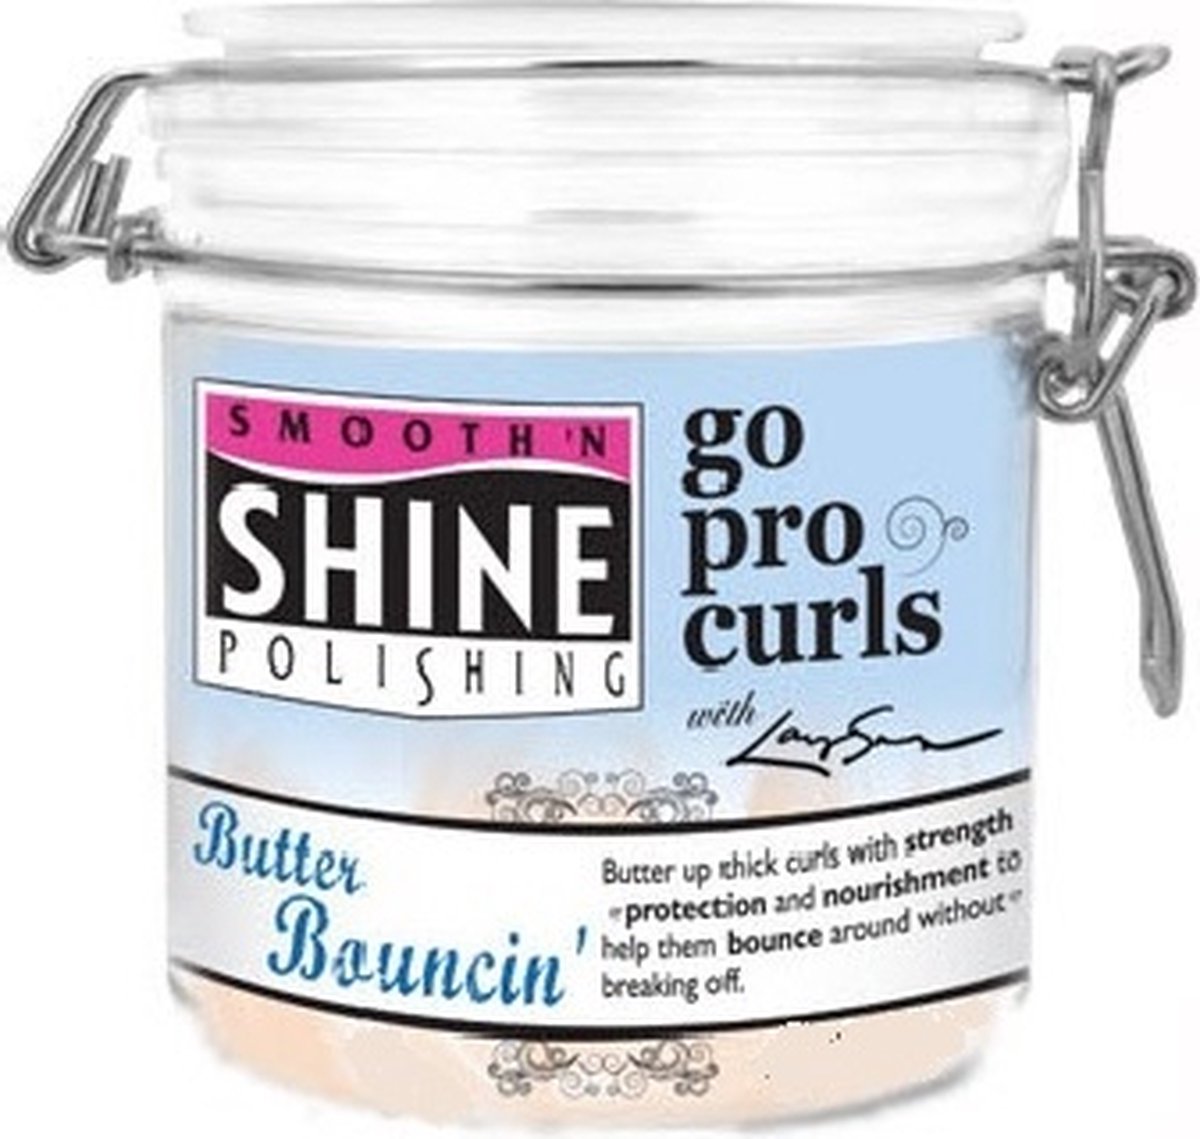 Smooth N Shine GoPro Curl Butter Bouncin 328g